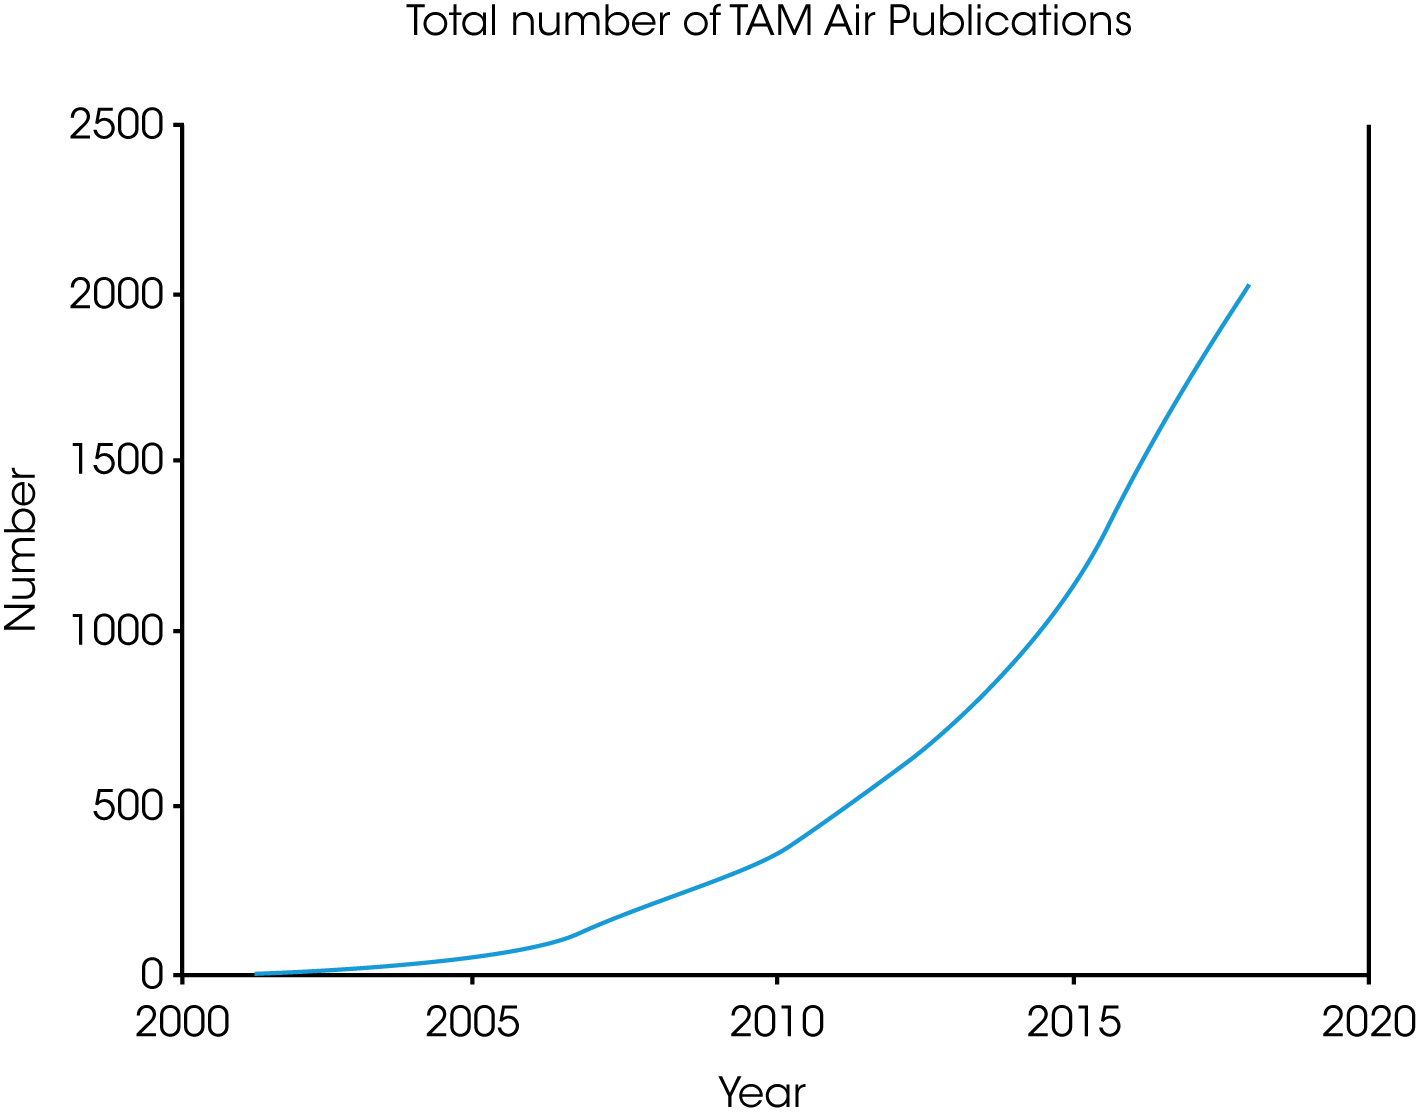 Figure 6. TAM Air publication growth.